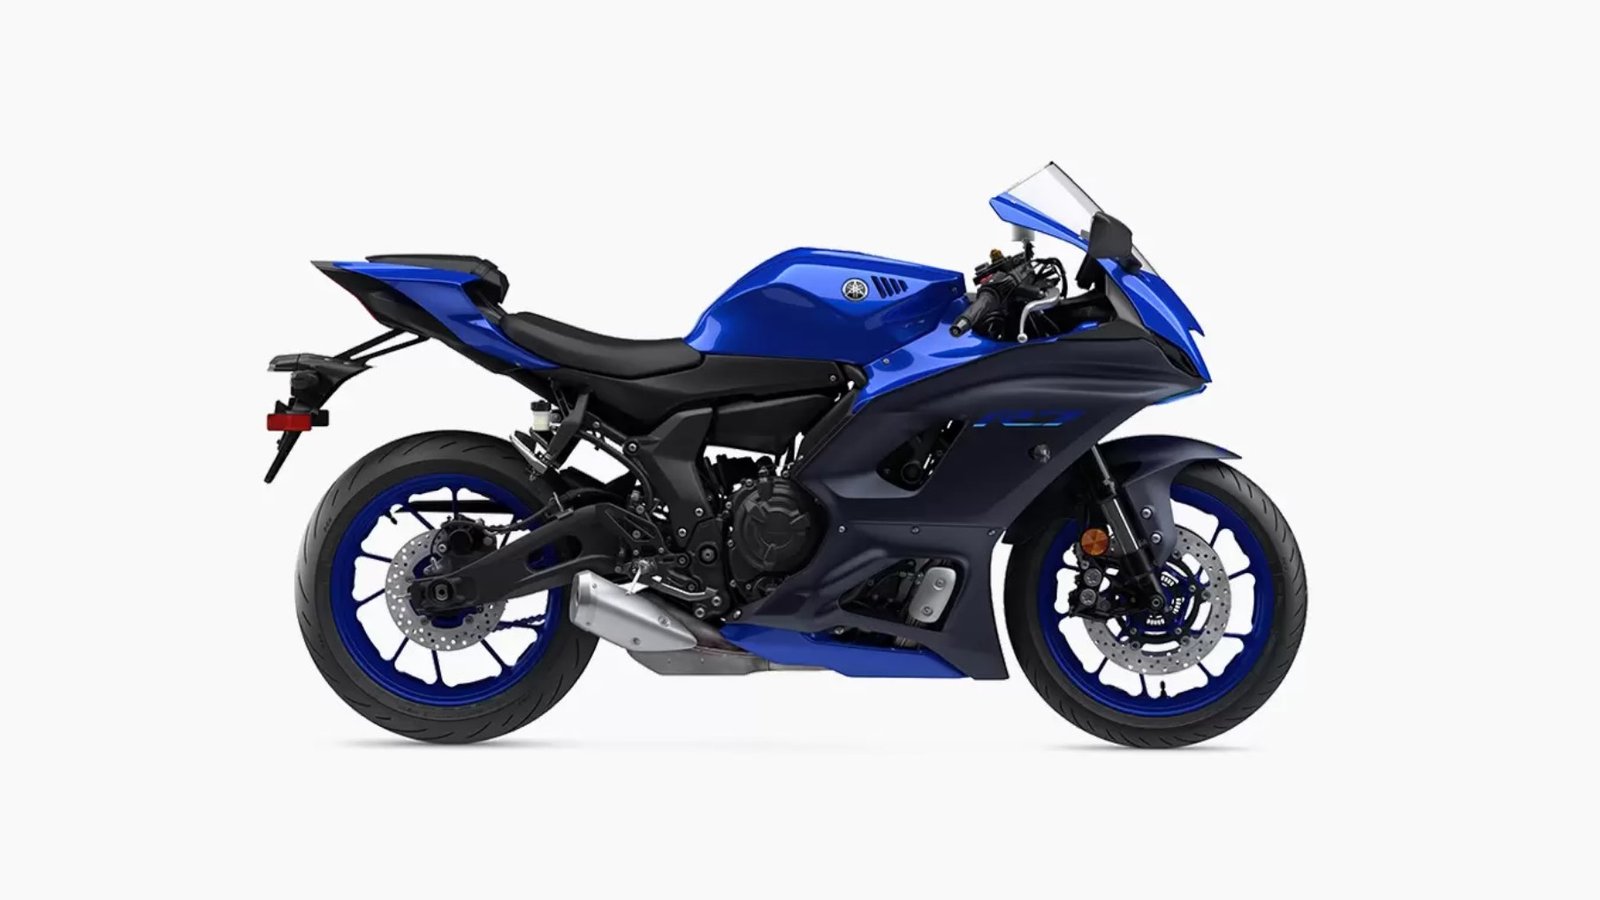 https://motostatz.com/wp-content/uploads/2021/09/Yamaha-YZF-R7-top-speed-and-acceleration.jpg